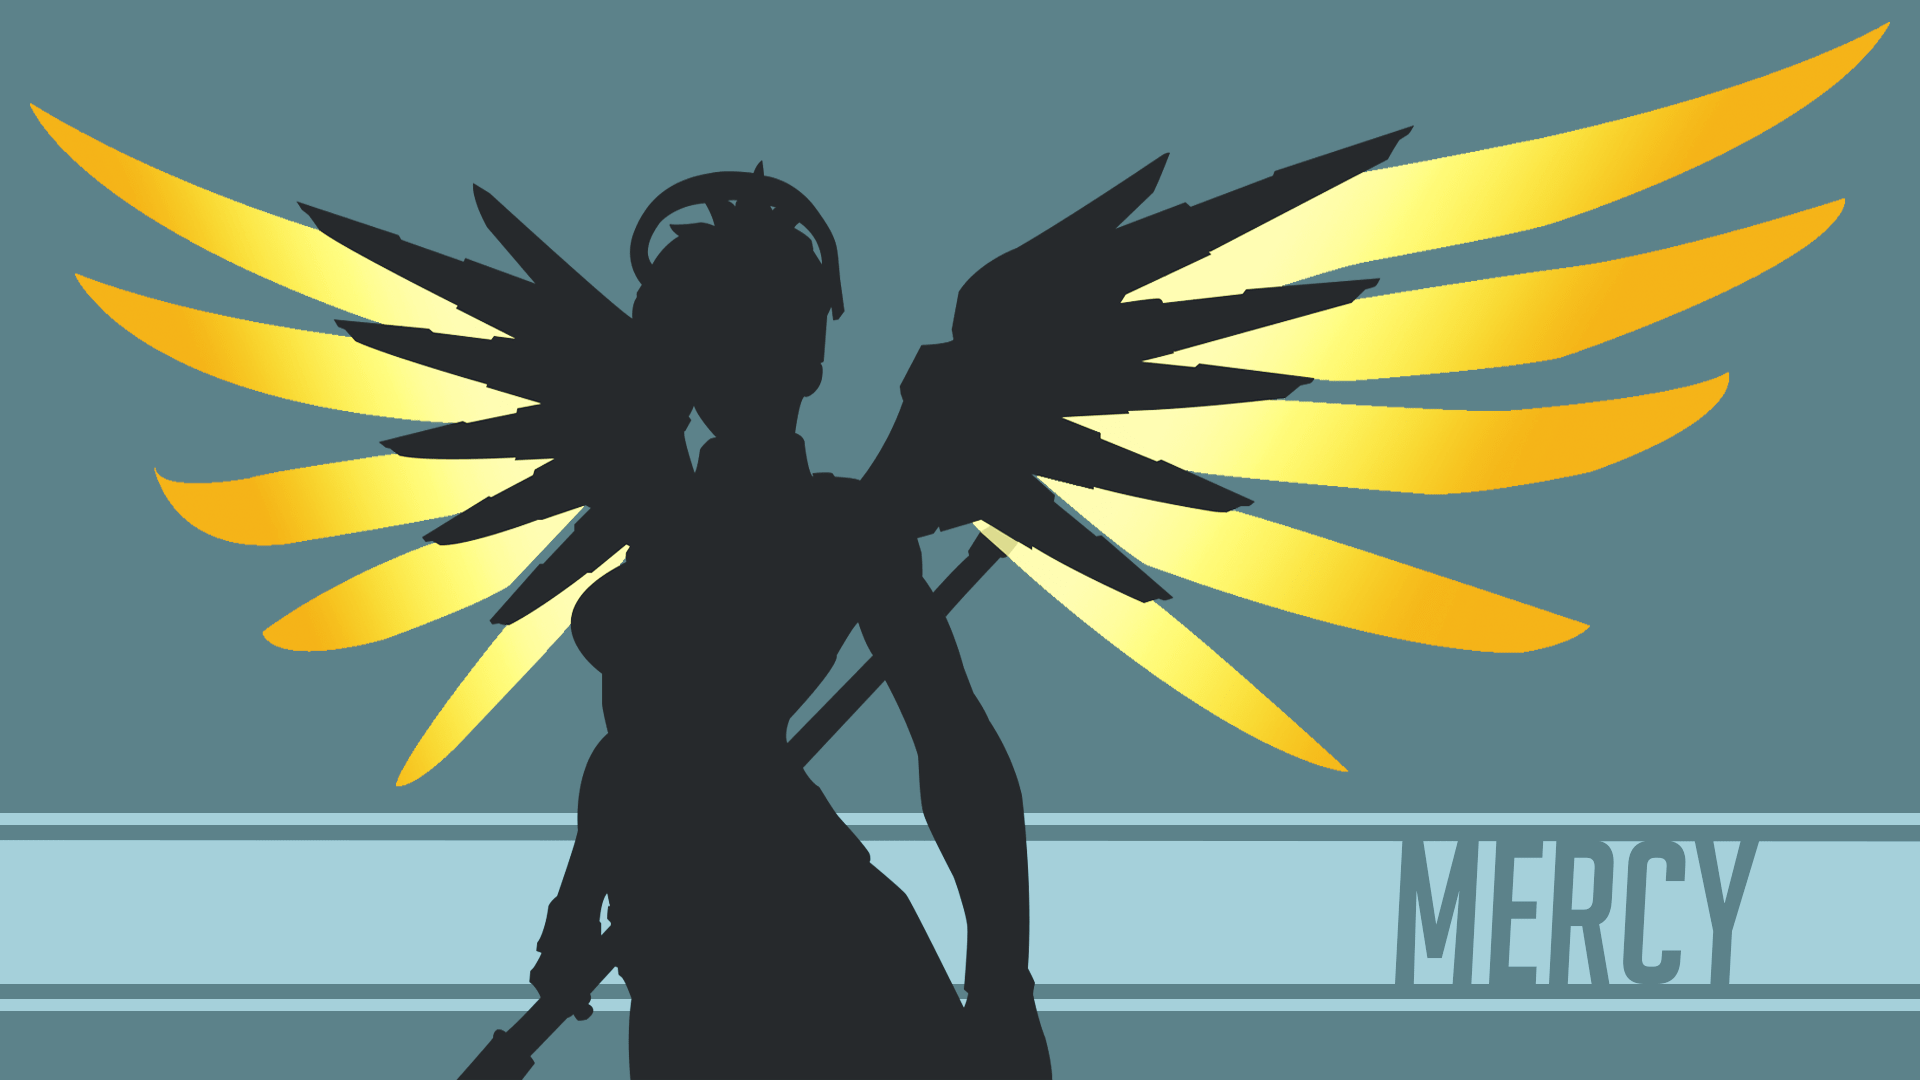 Mercy Download - Overwatch Mercy Wallpaper Minimalist - HD Wallpaper 